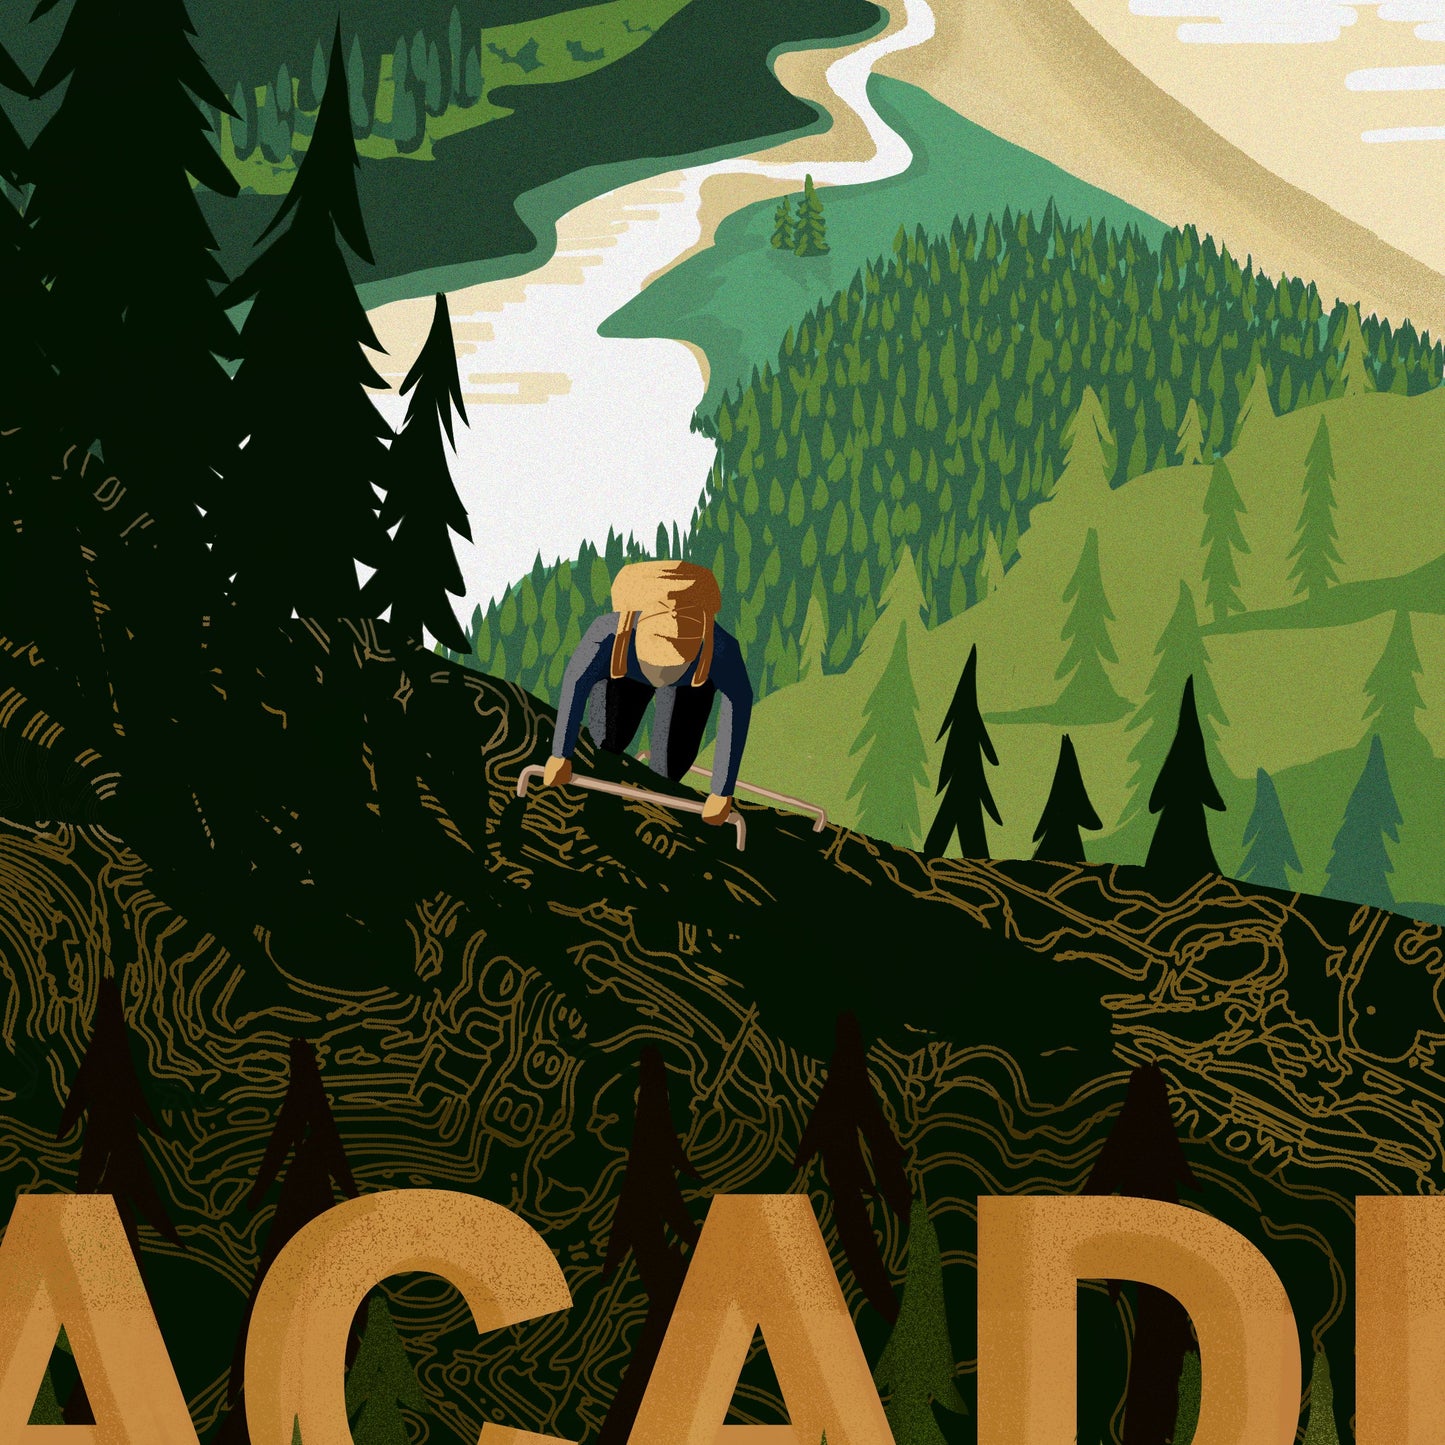 Acadia National Park Print